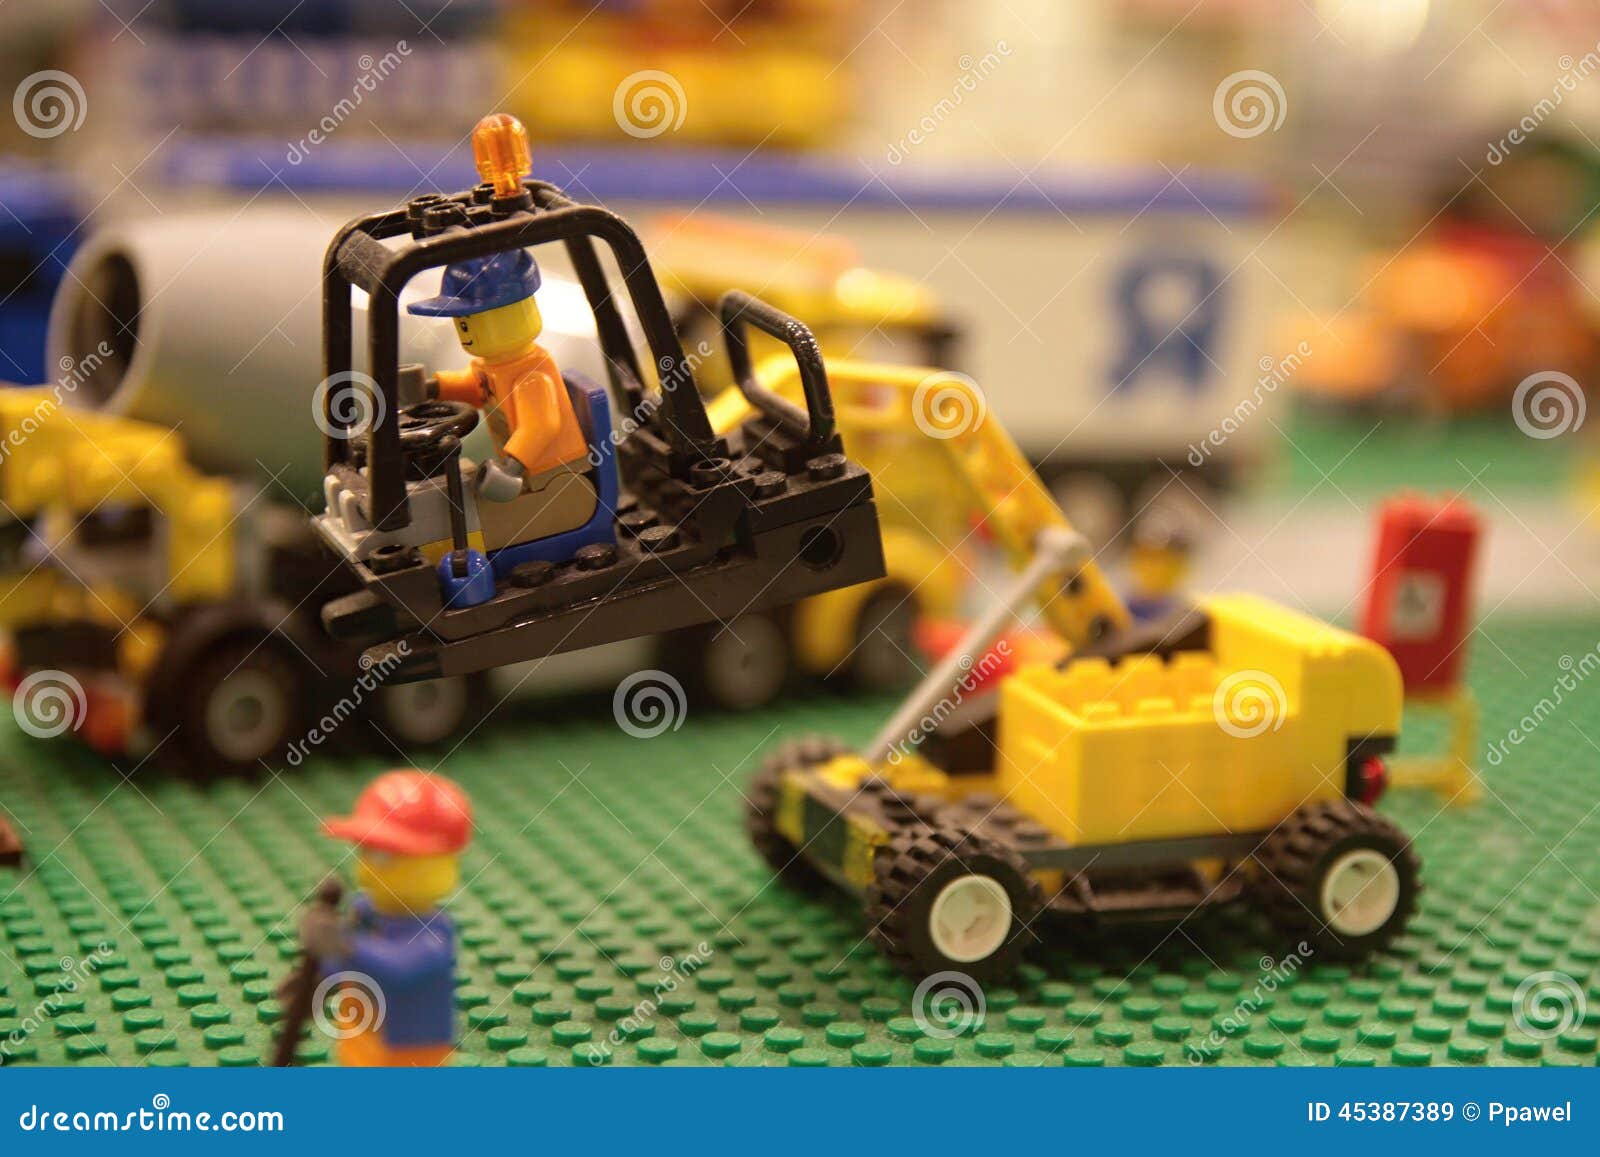 Lego crane editorial stock image. Image of crane, play - 45387389